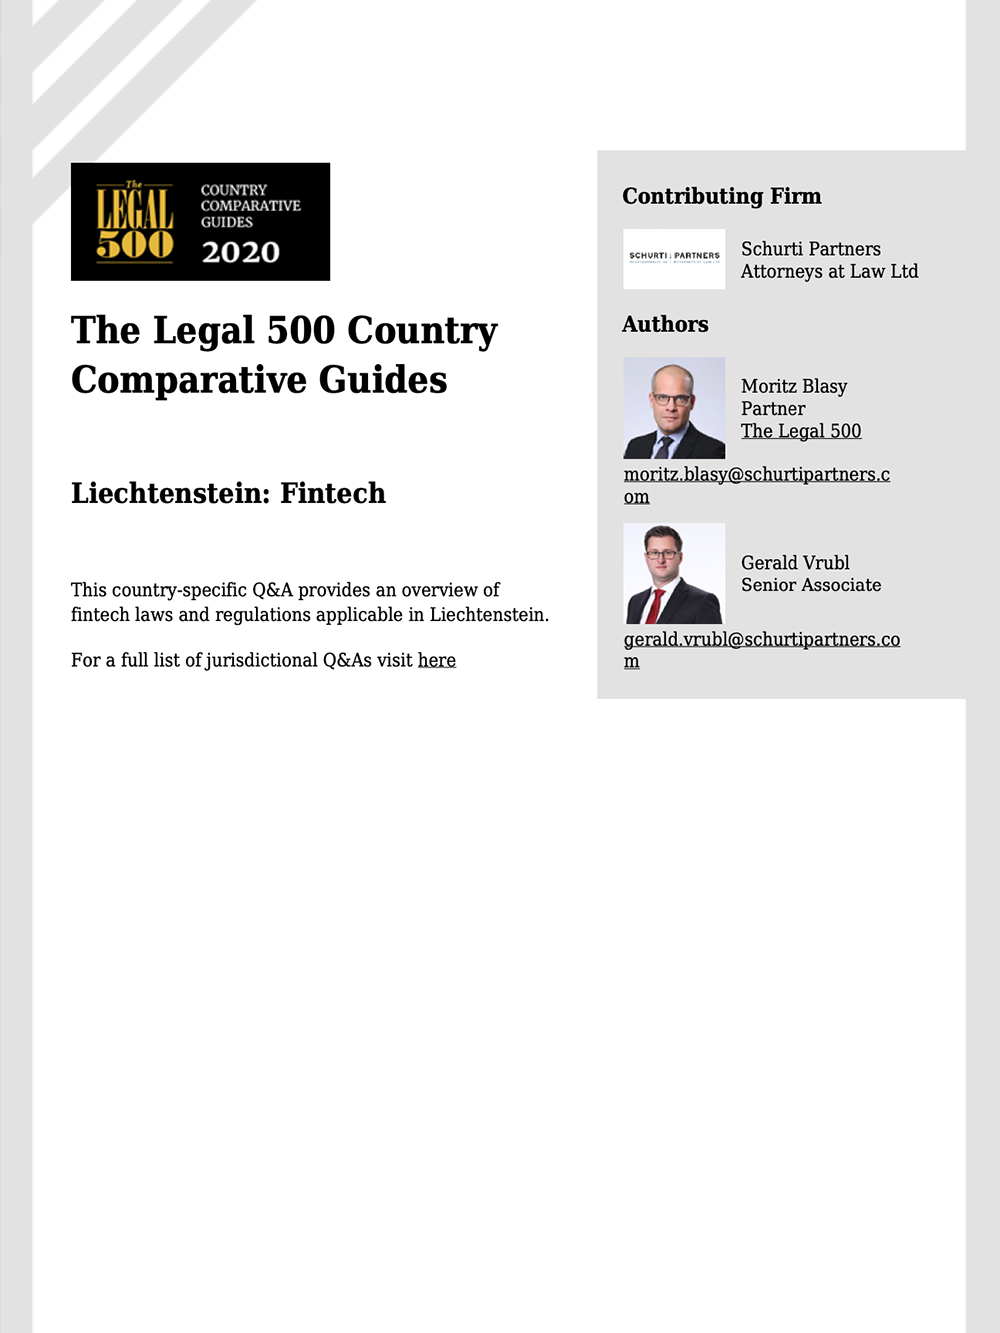 The Legal 500 | FinTech Q&As